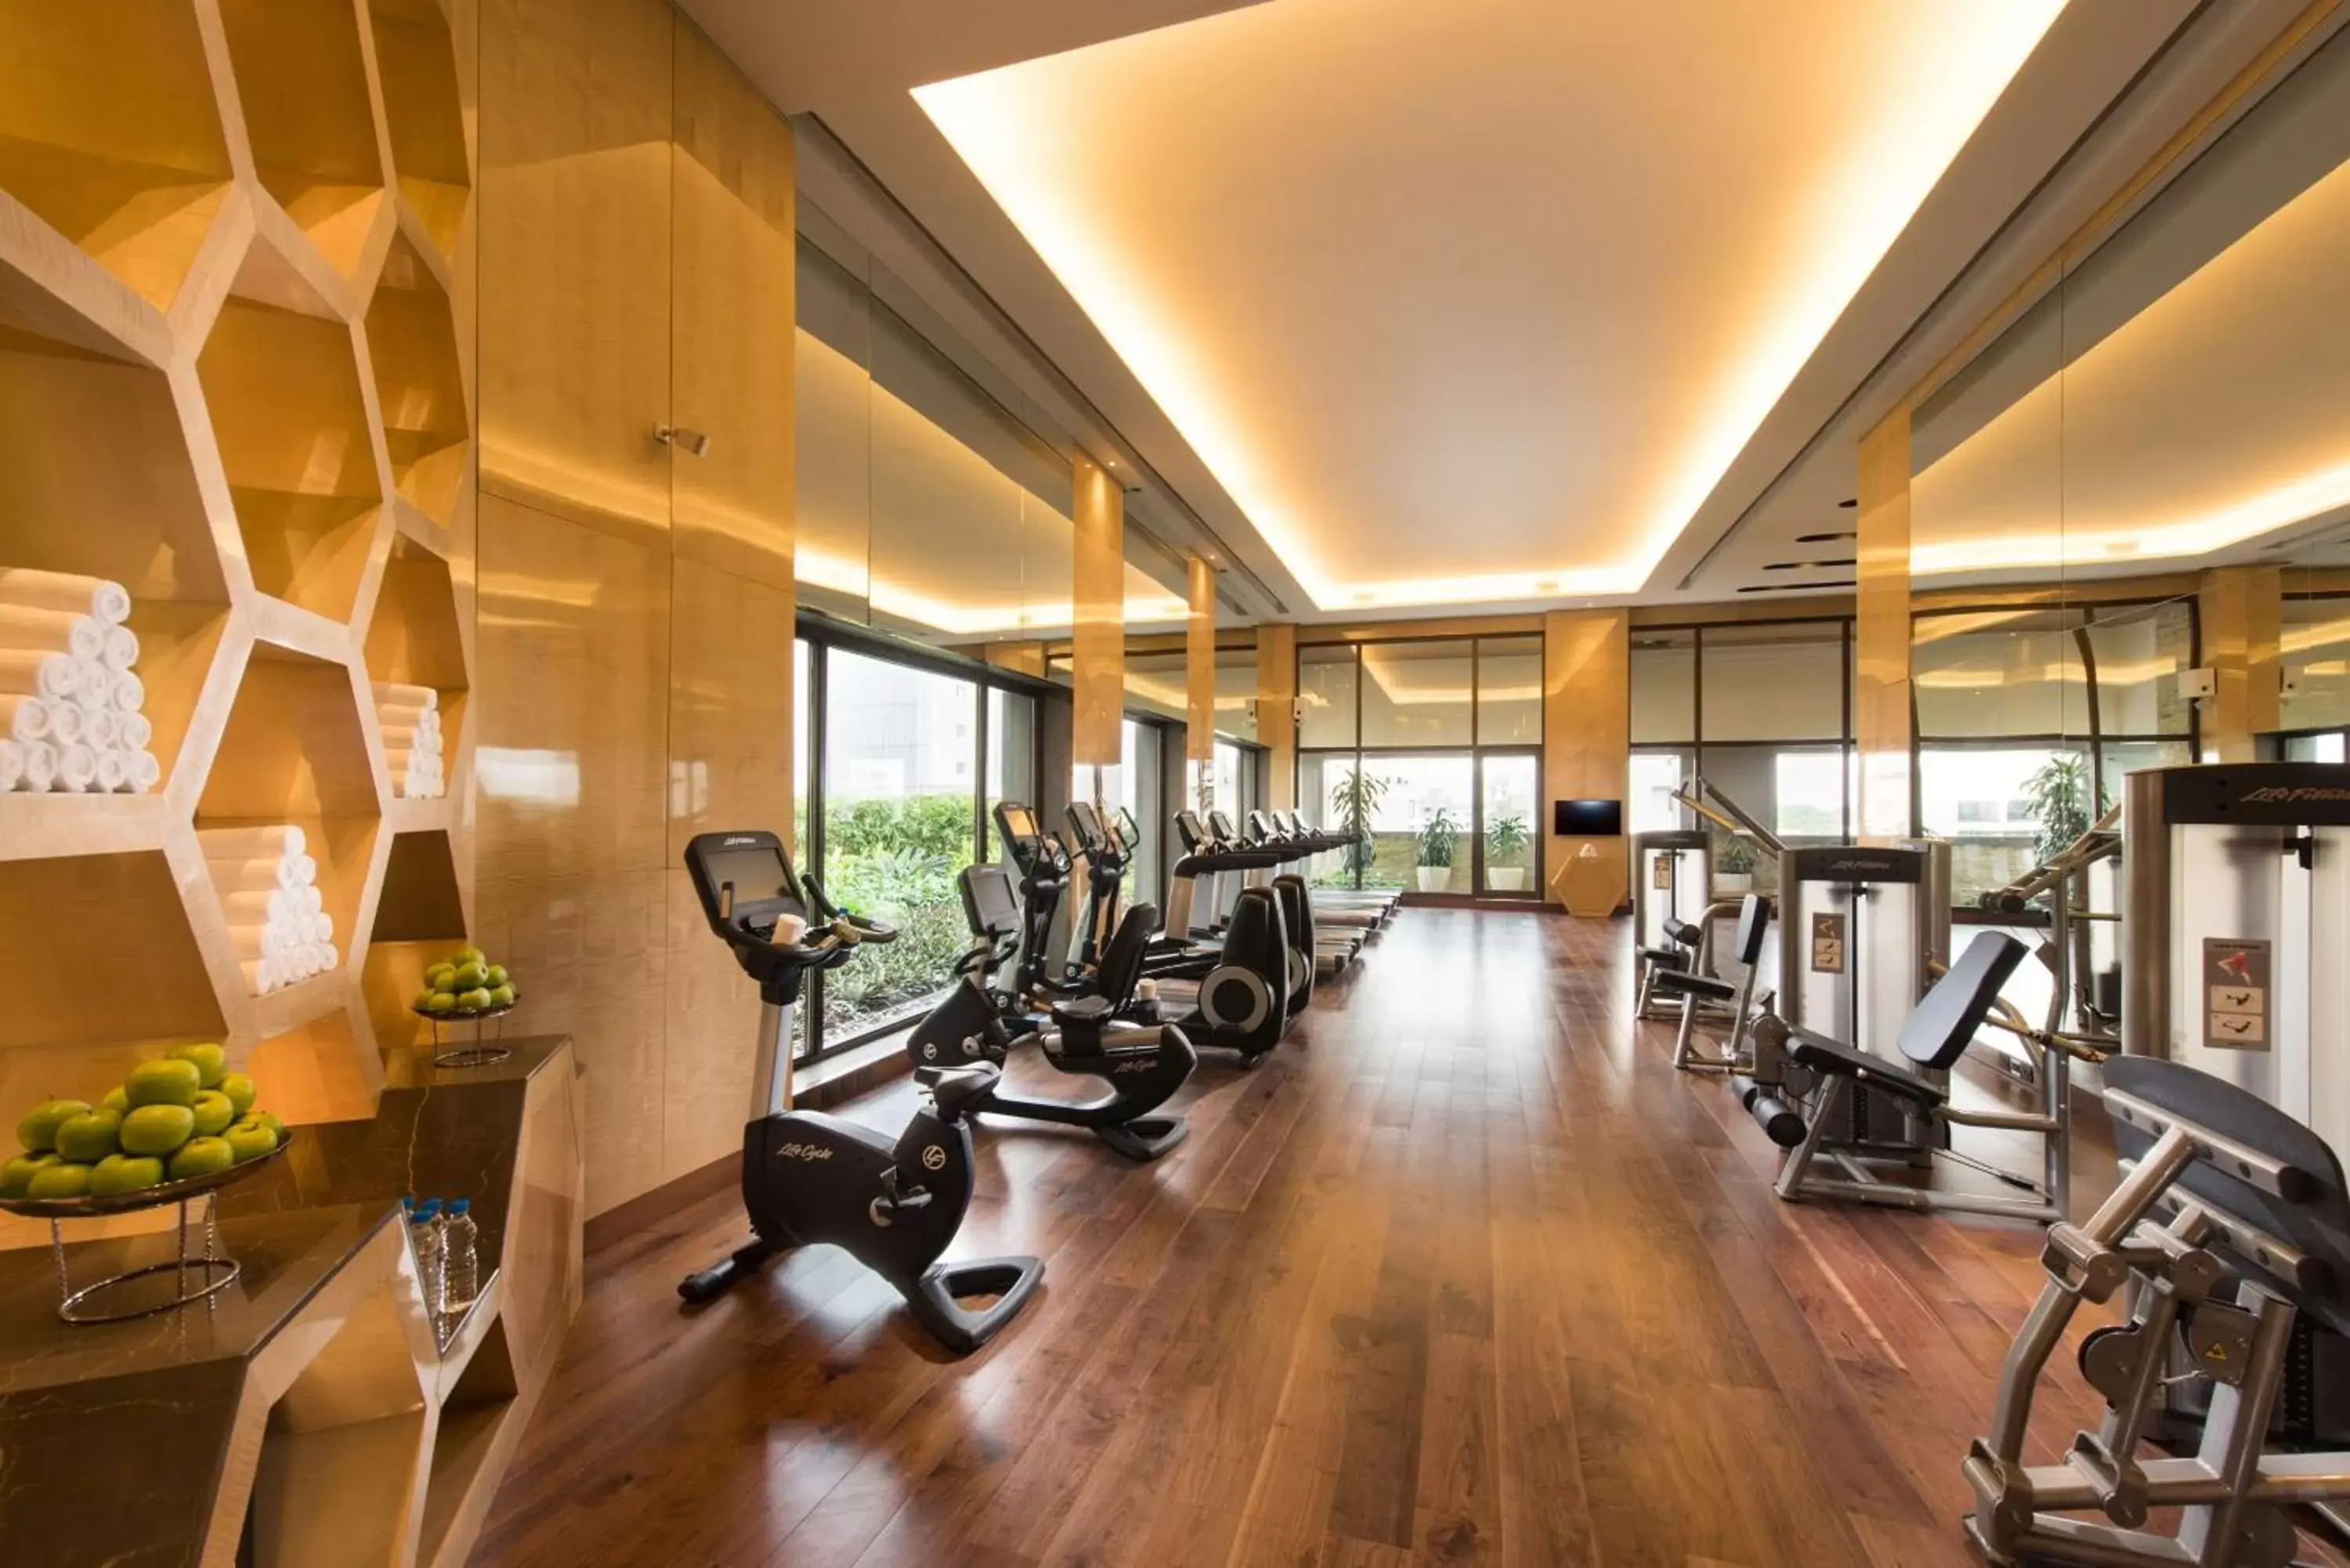 Fitness centre/facilities, Fitness Center/Facilities in Conrad Pune